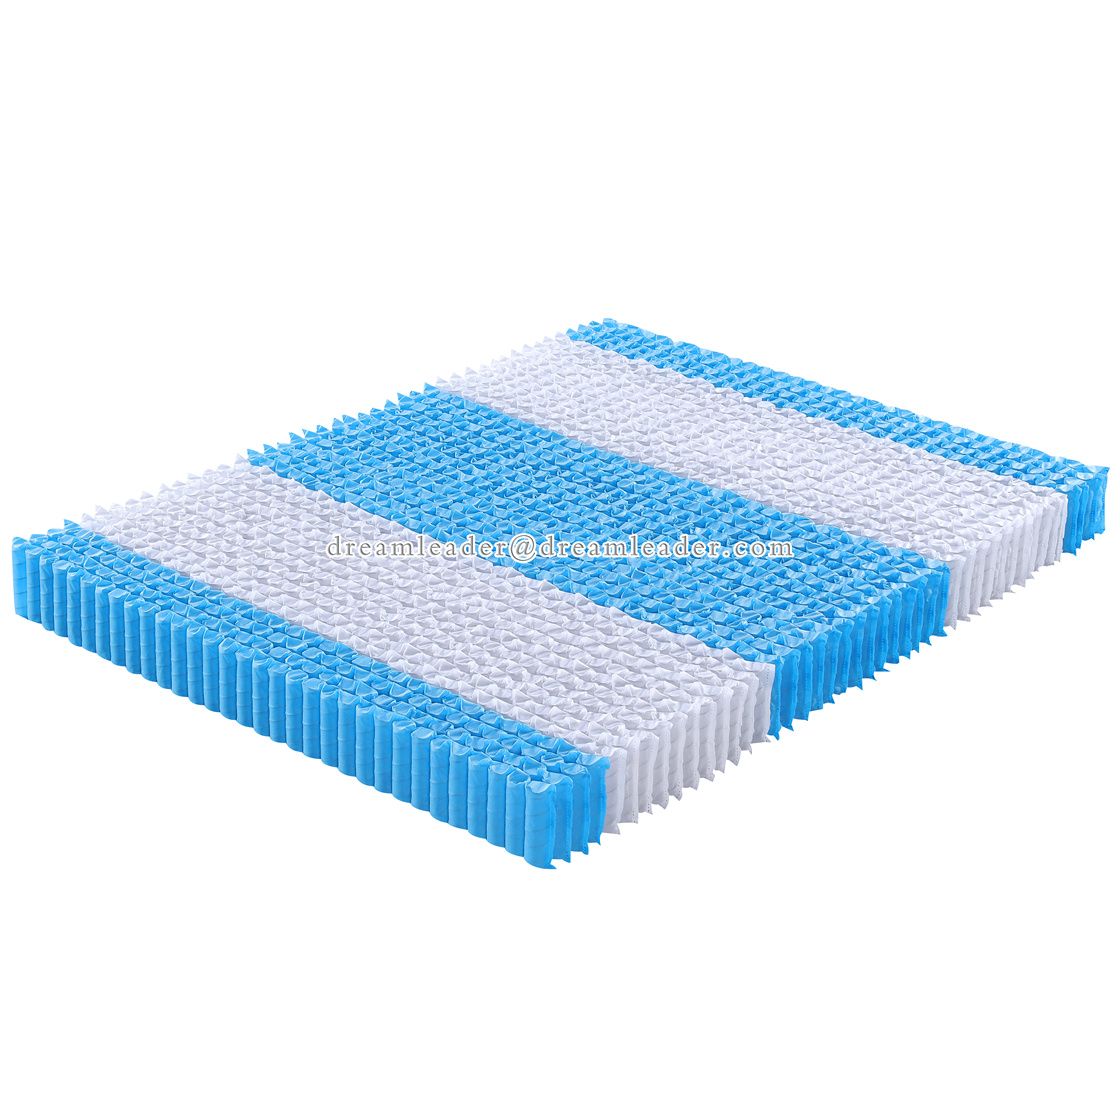 spring mattress queen size manufacturer